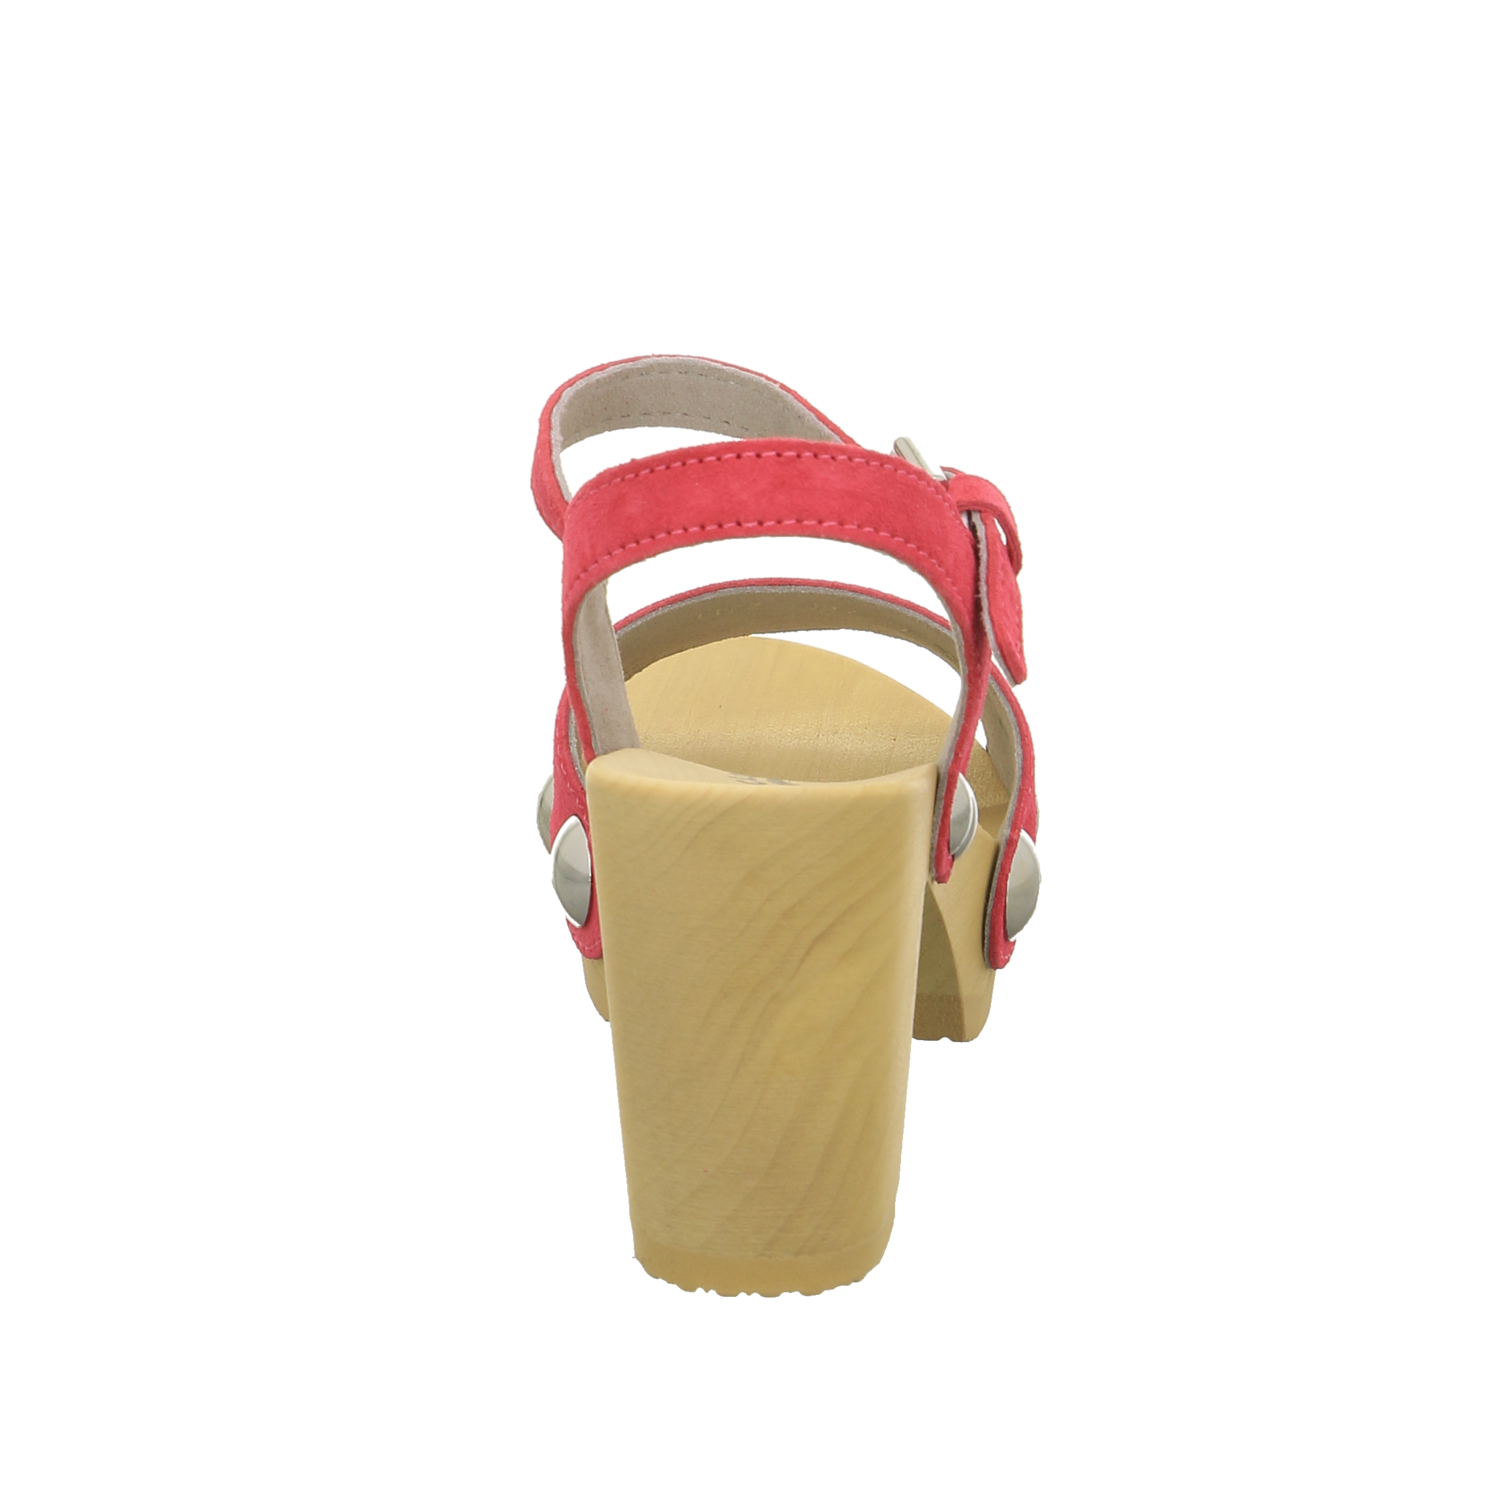 Softclox Sandalette bis 45 mm pink / fuchsia